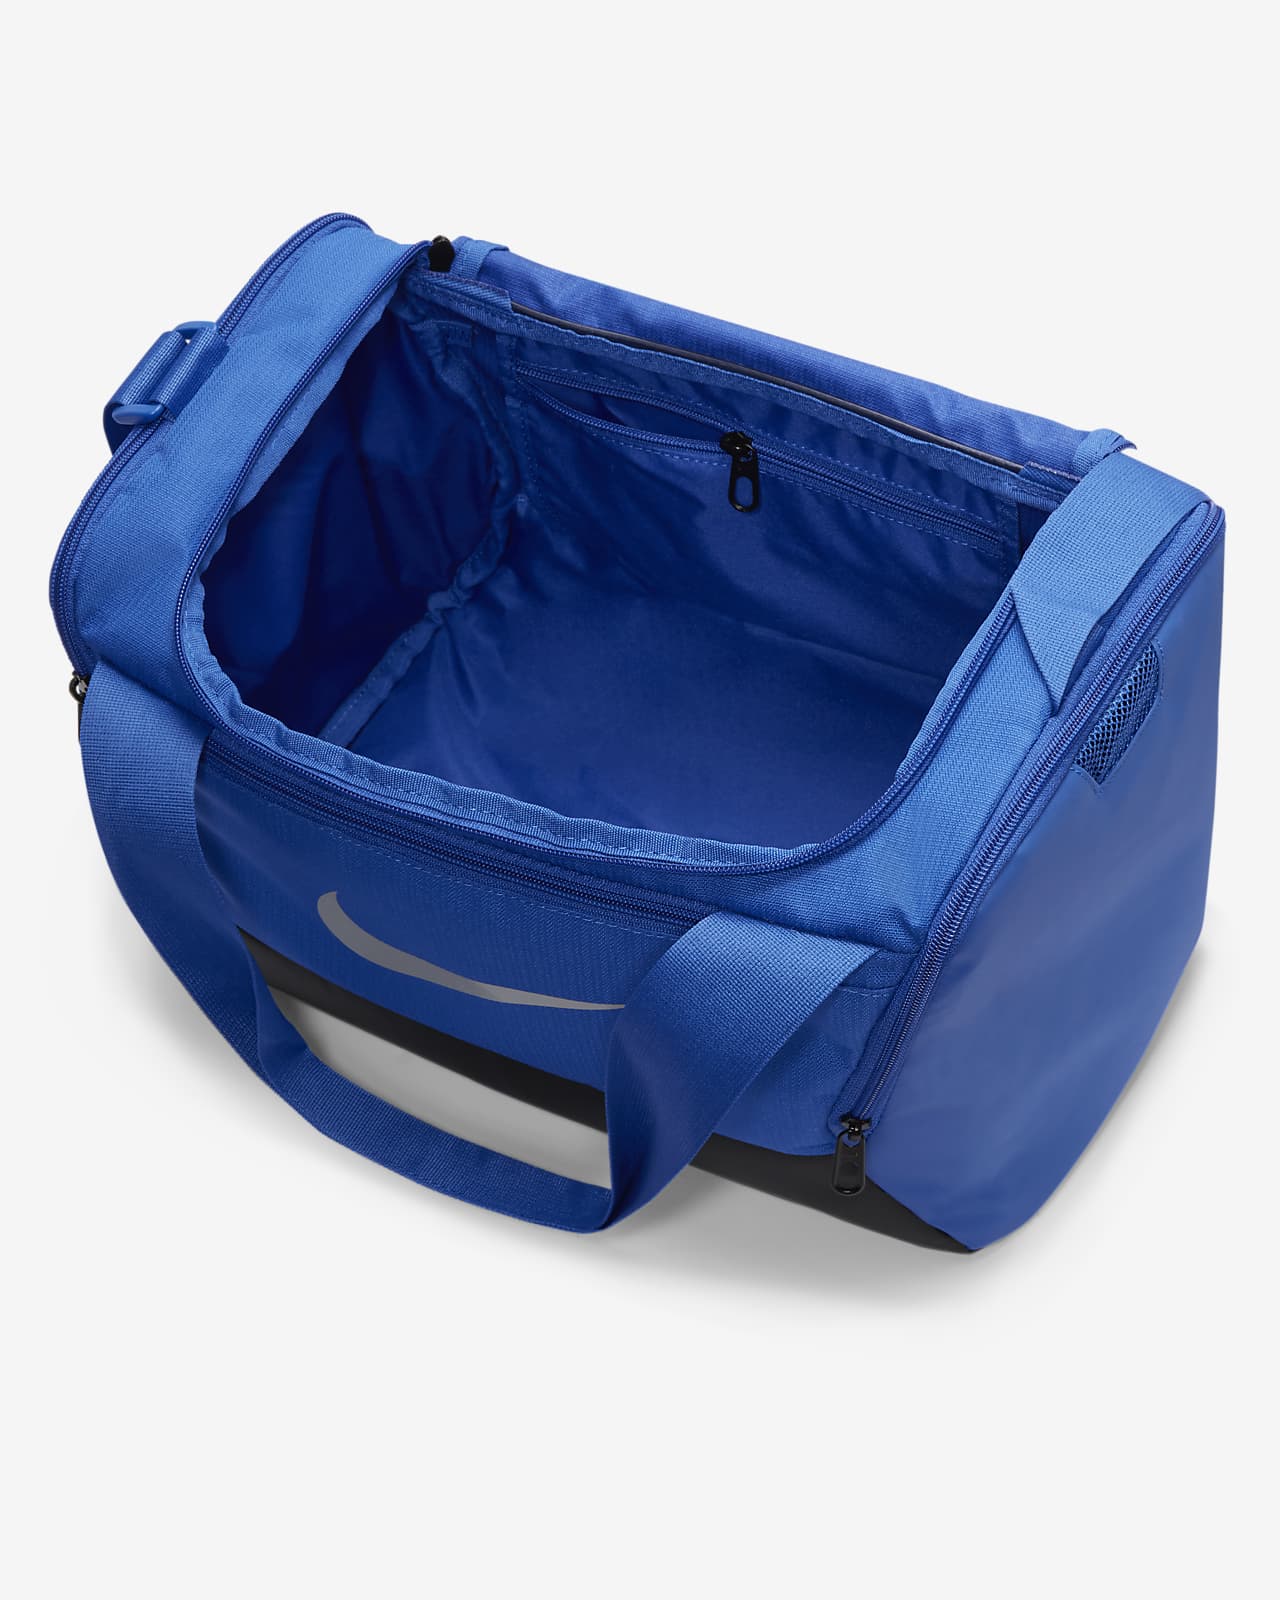 Nike Brasilia 9.5 Training Duffel Bag (Extra-Small, 25L) – iGolfMM